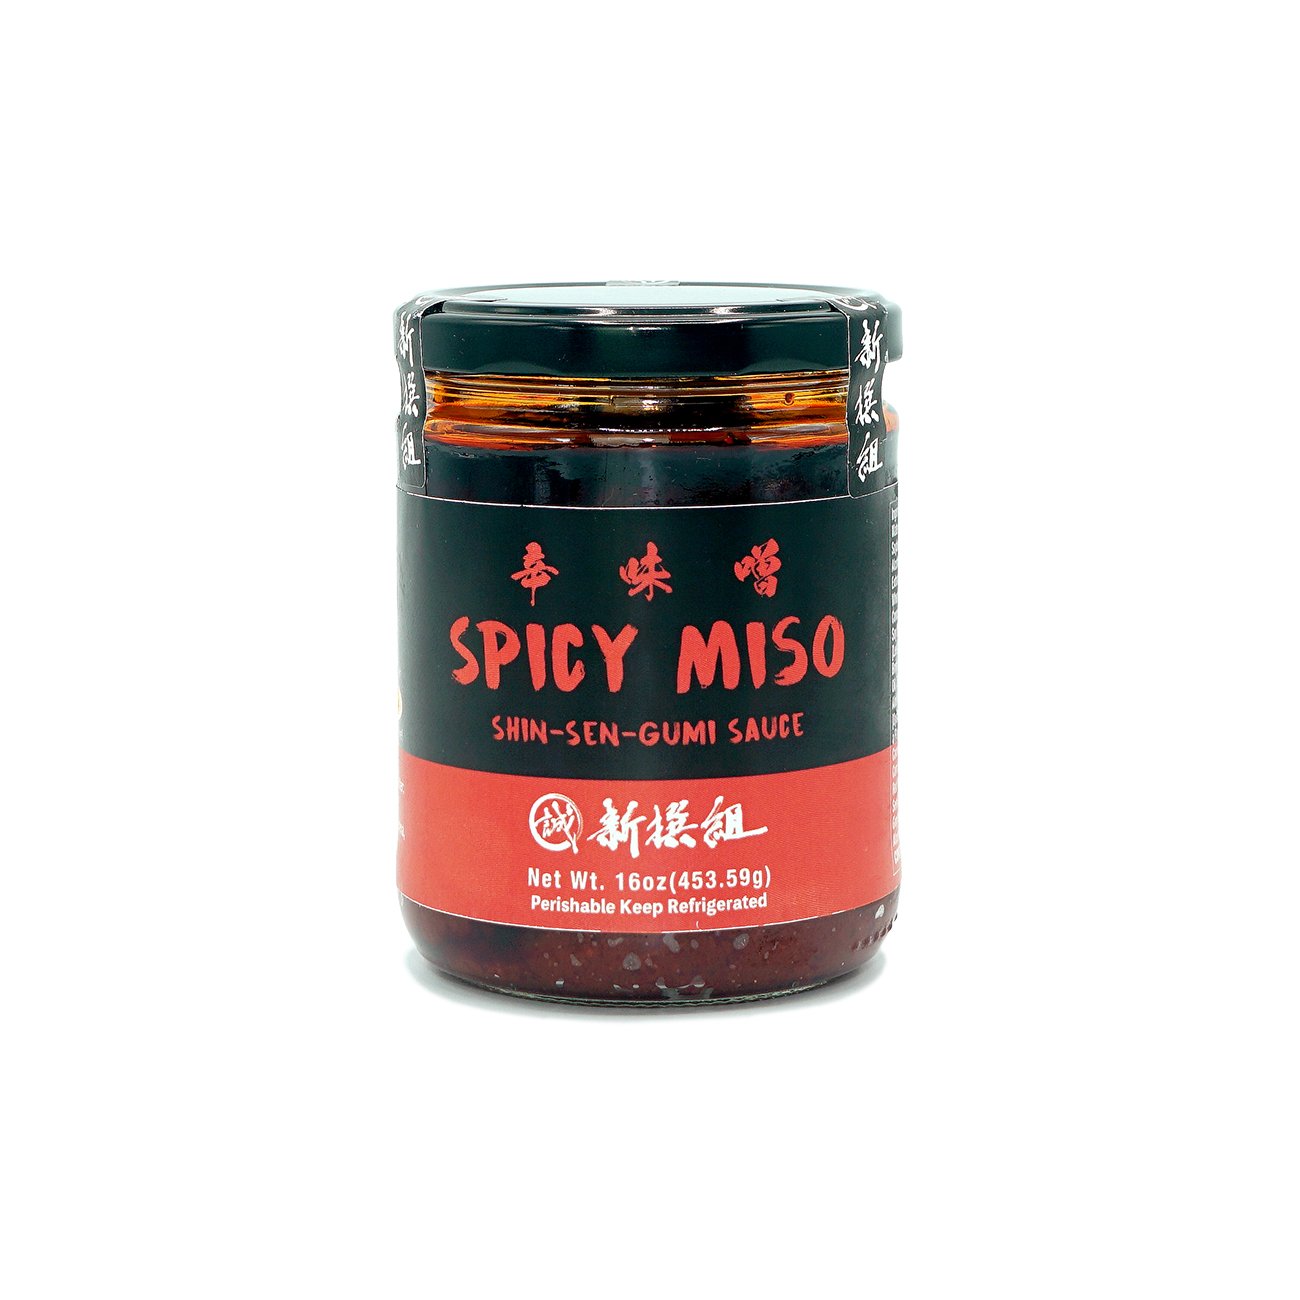 Spicy Miso